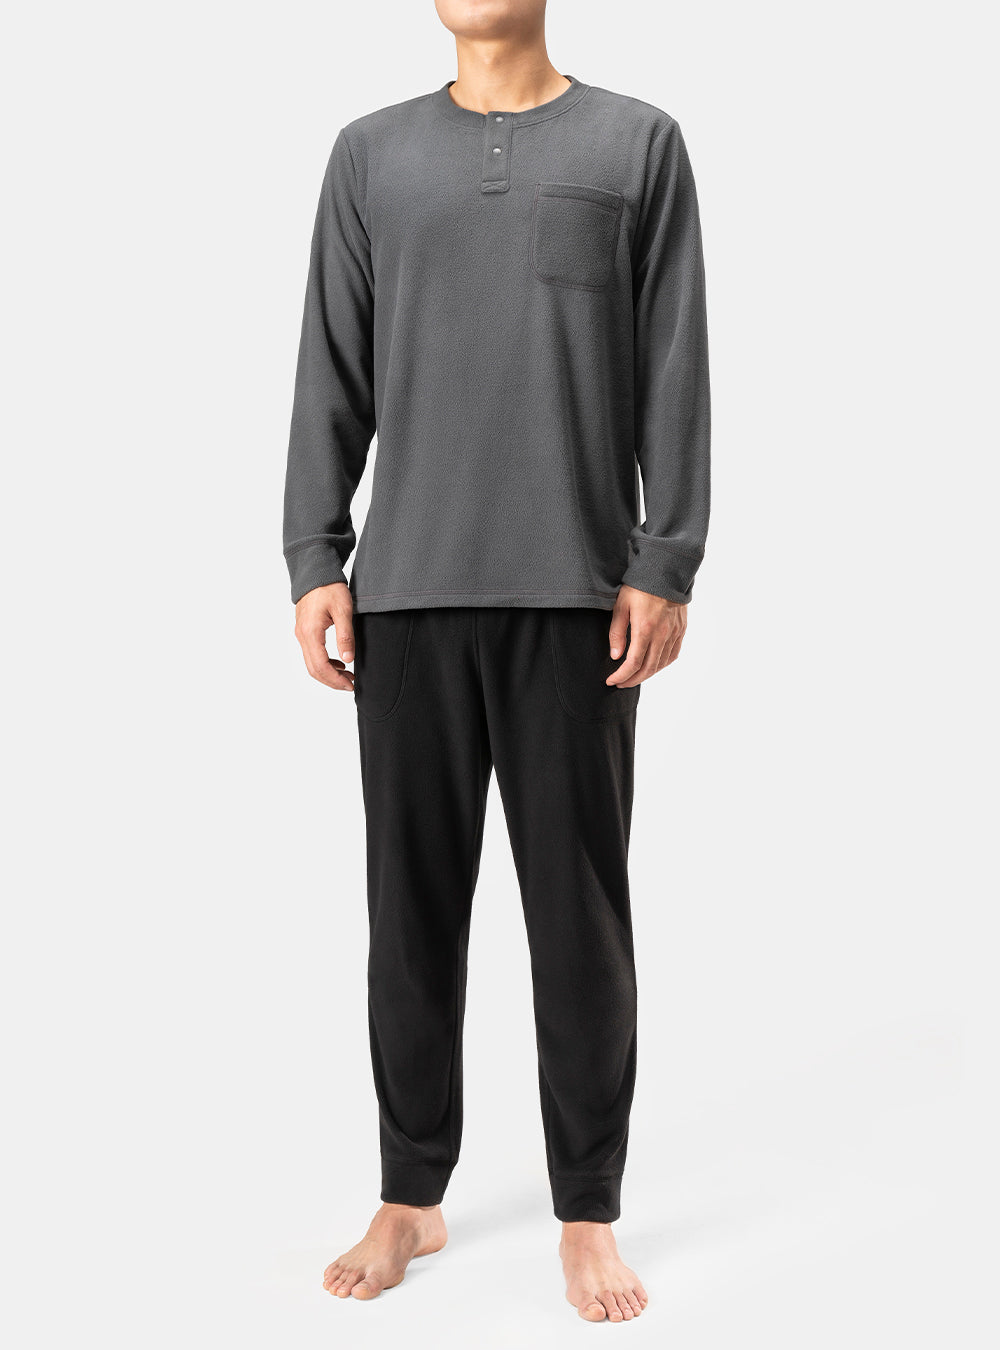 Roudelain Soft & Cozy Short Sleeve & Jogger Loungewear Set - Macy's